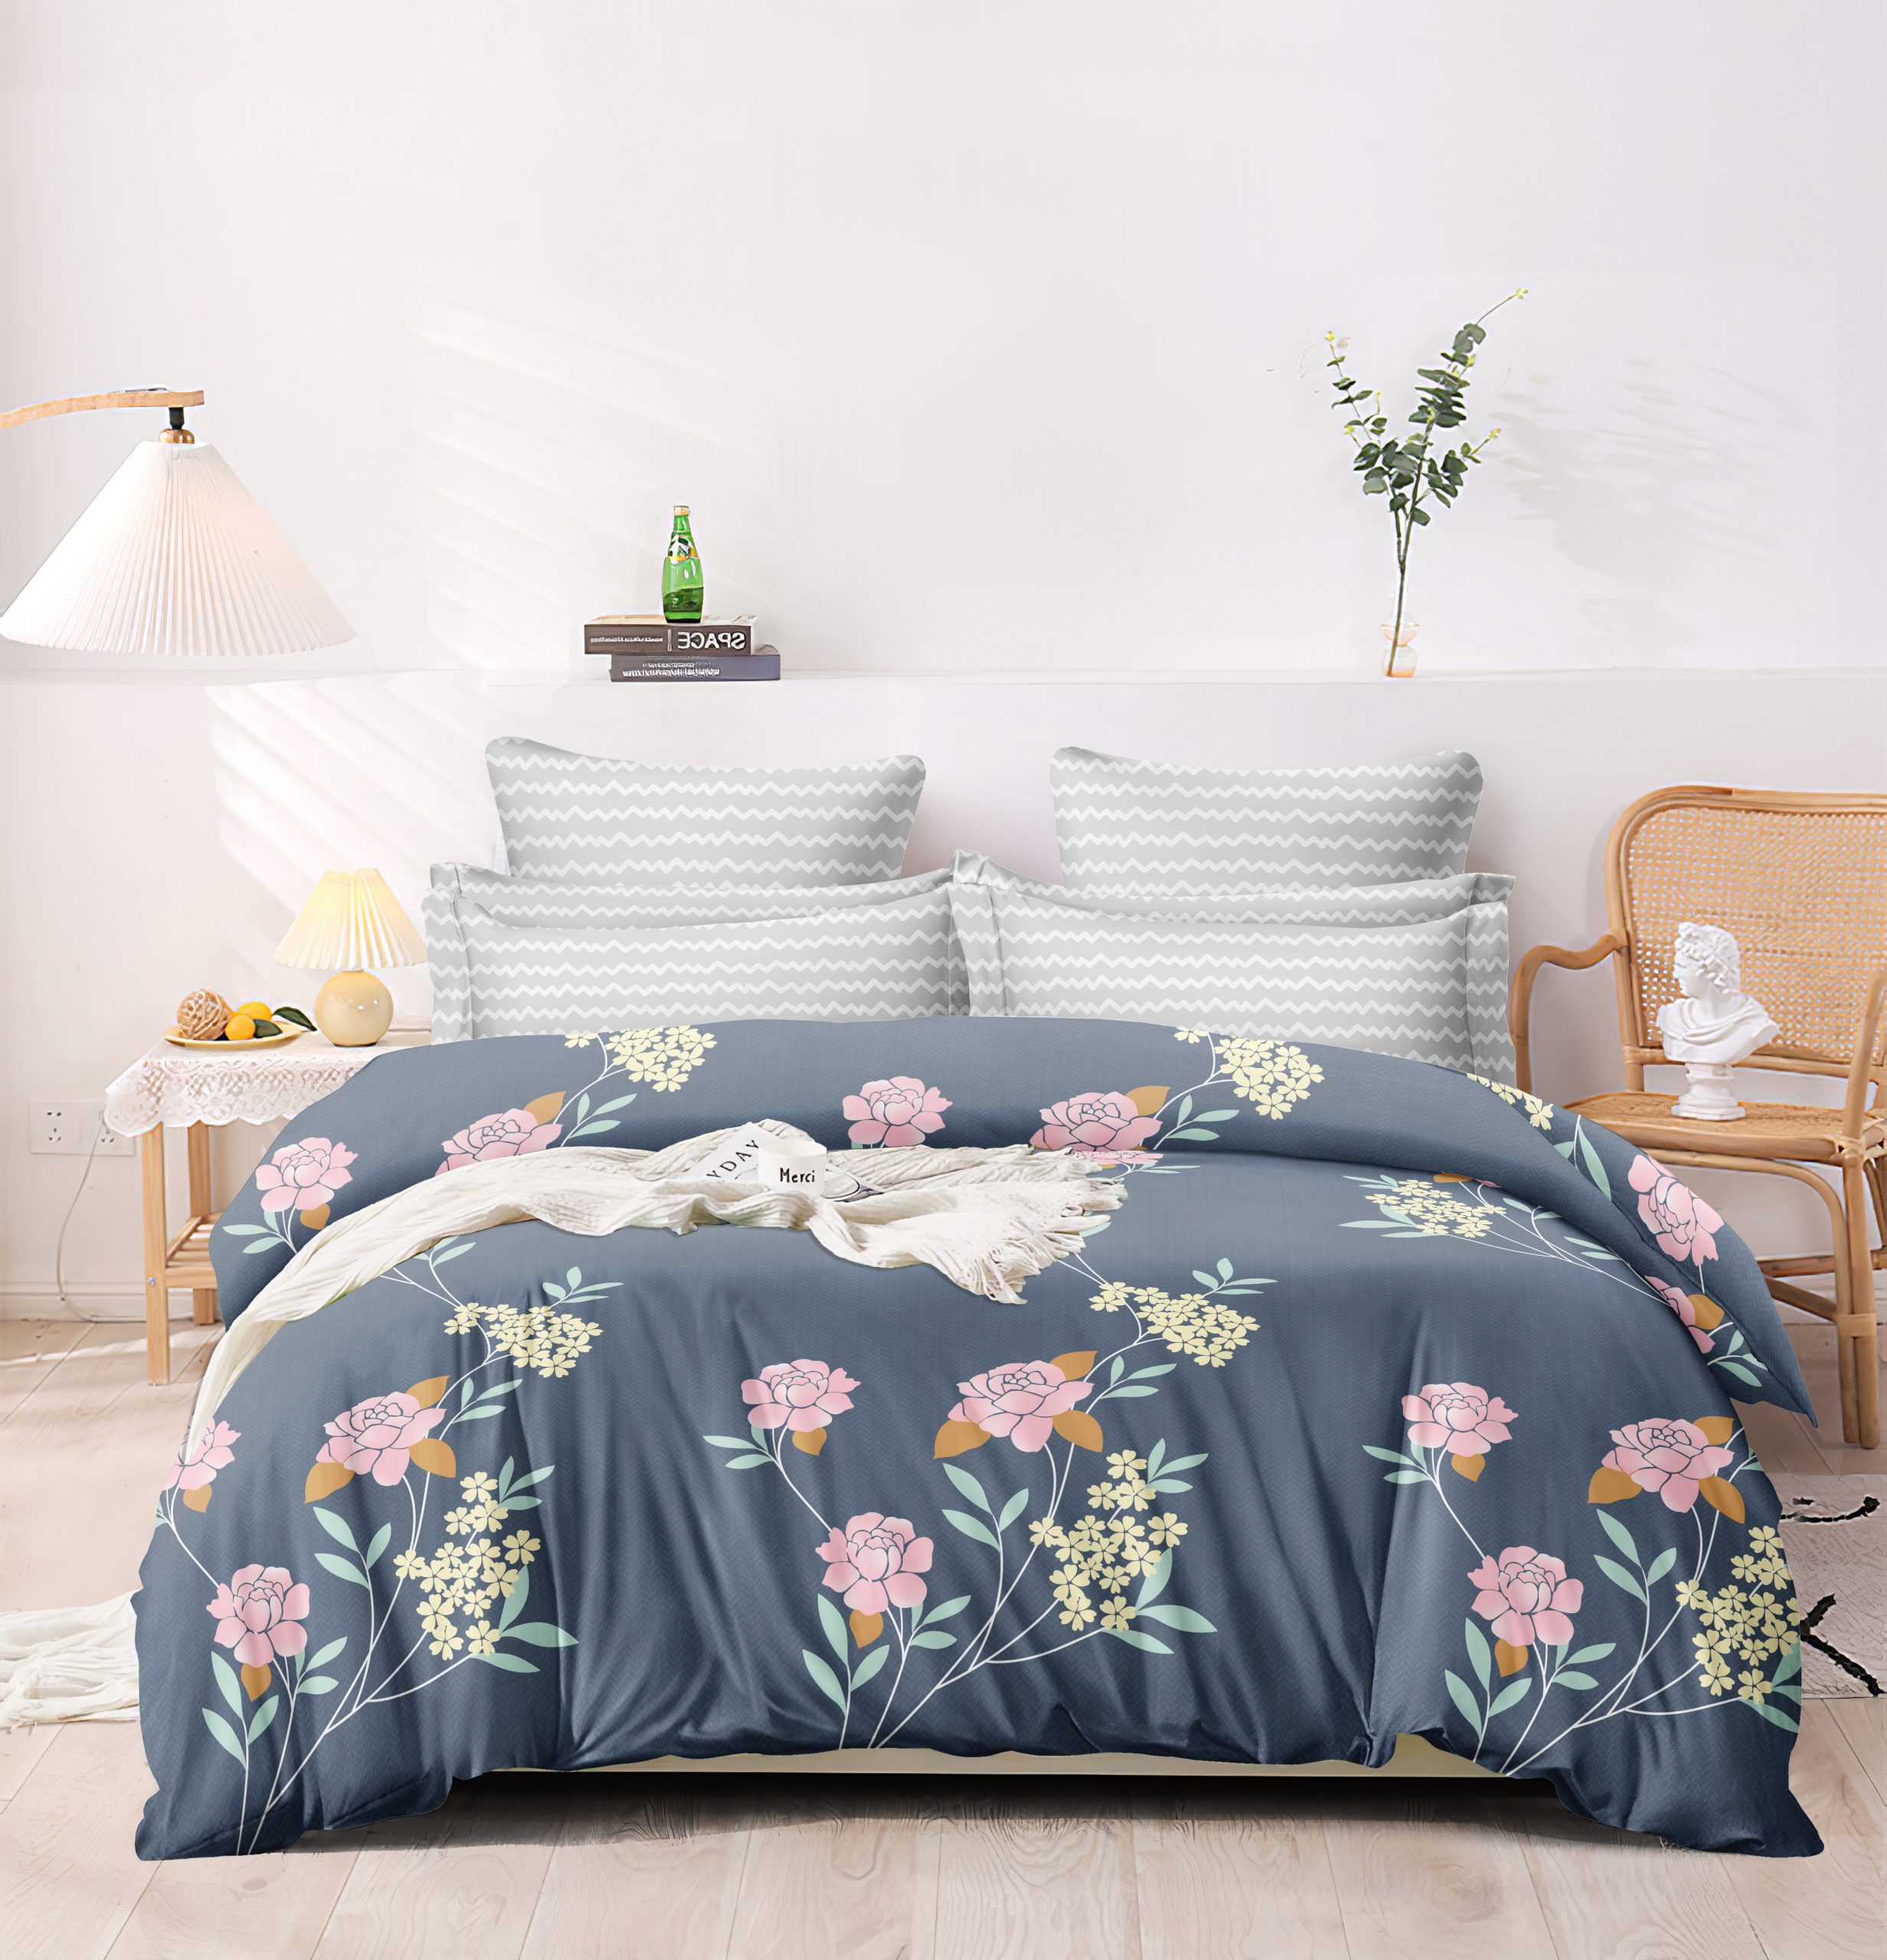 Homewards Floral Bunch Double Bed Comforter – Blue/Pink